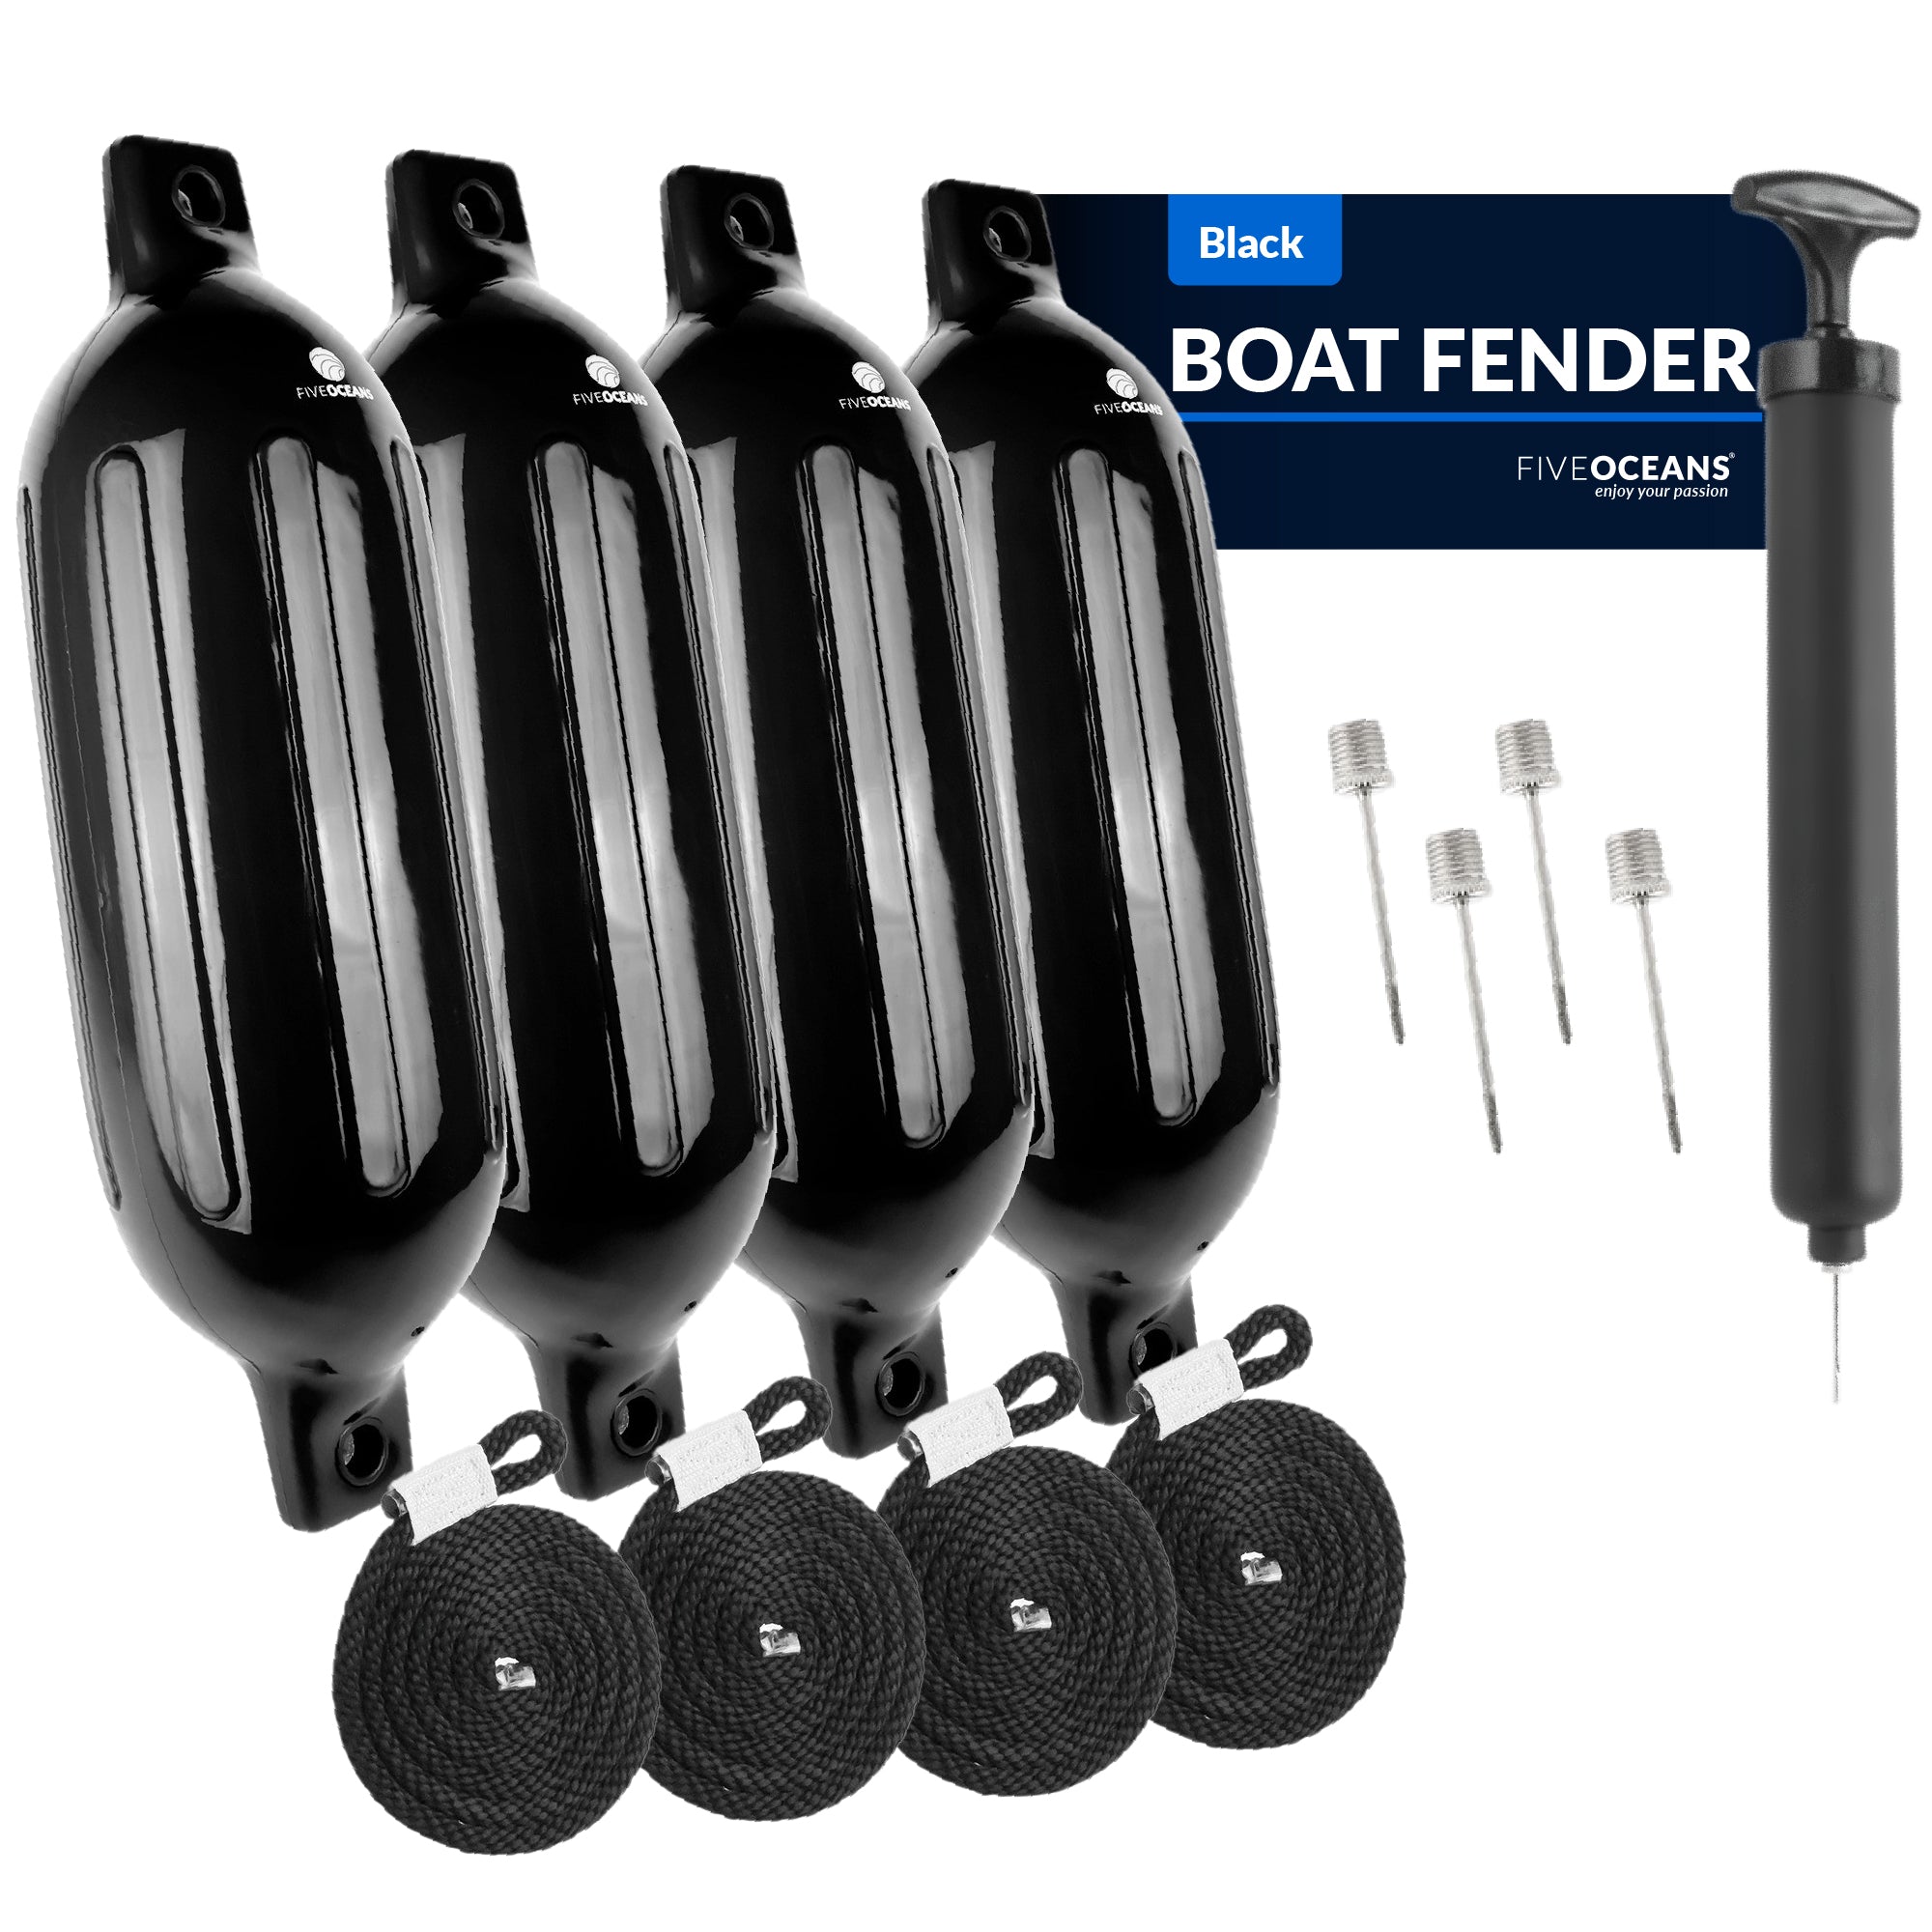 black boat fenders boat bumpers for docking 4 pack